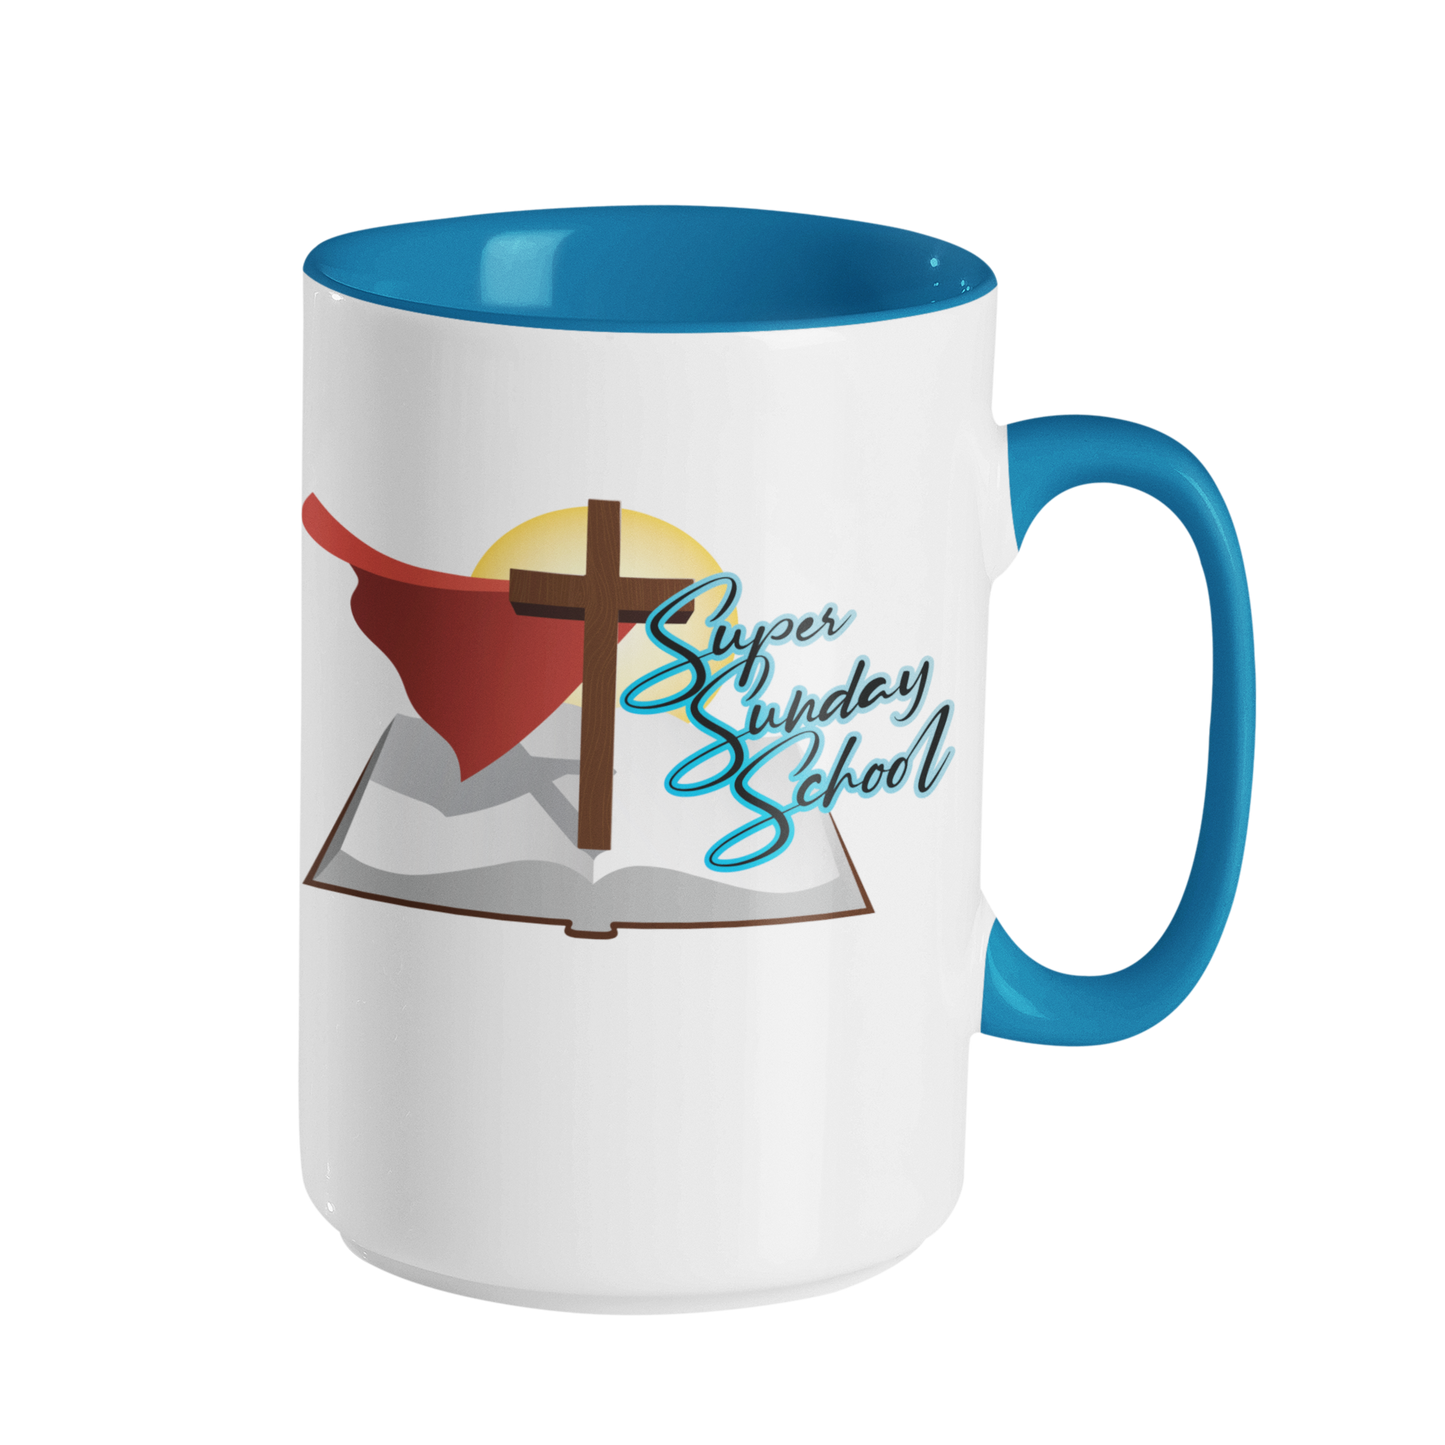 Super Sunday School Logo Mug